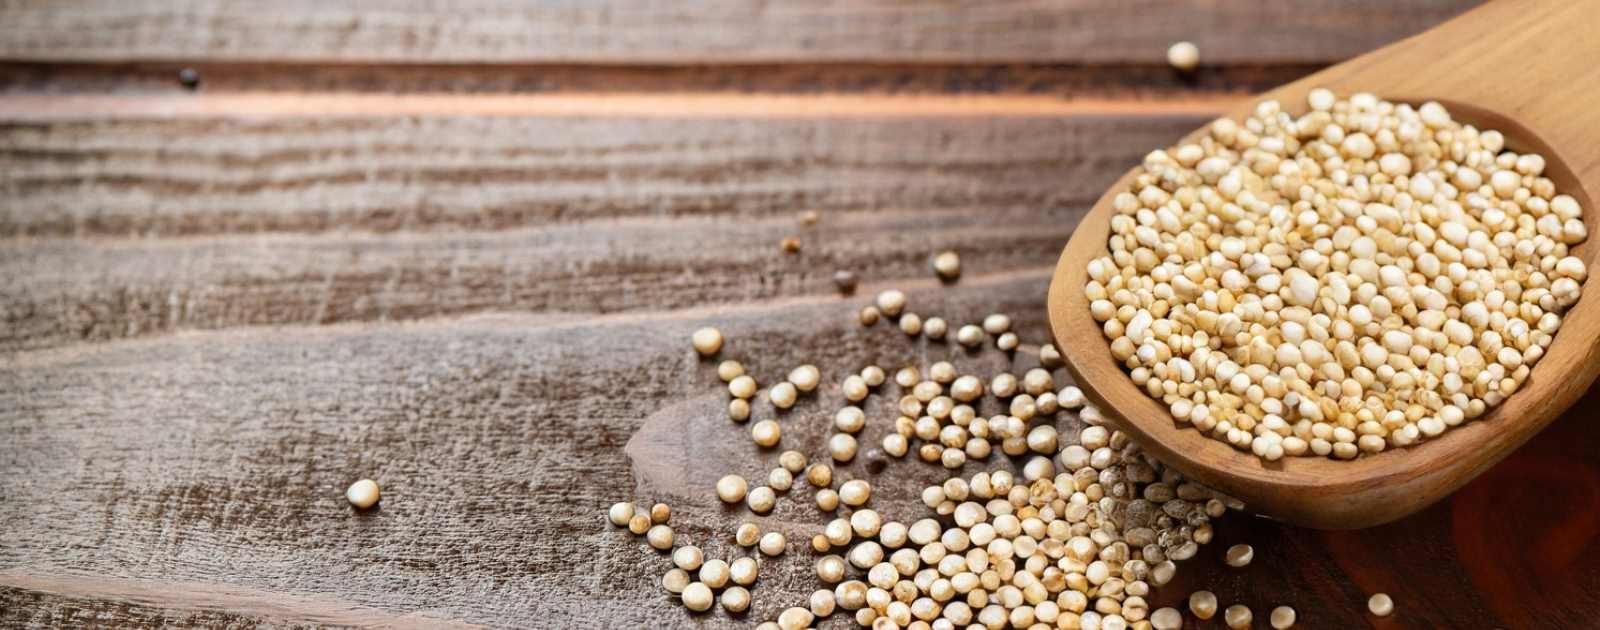 Is Quinoa a Grain or a Seed?